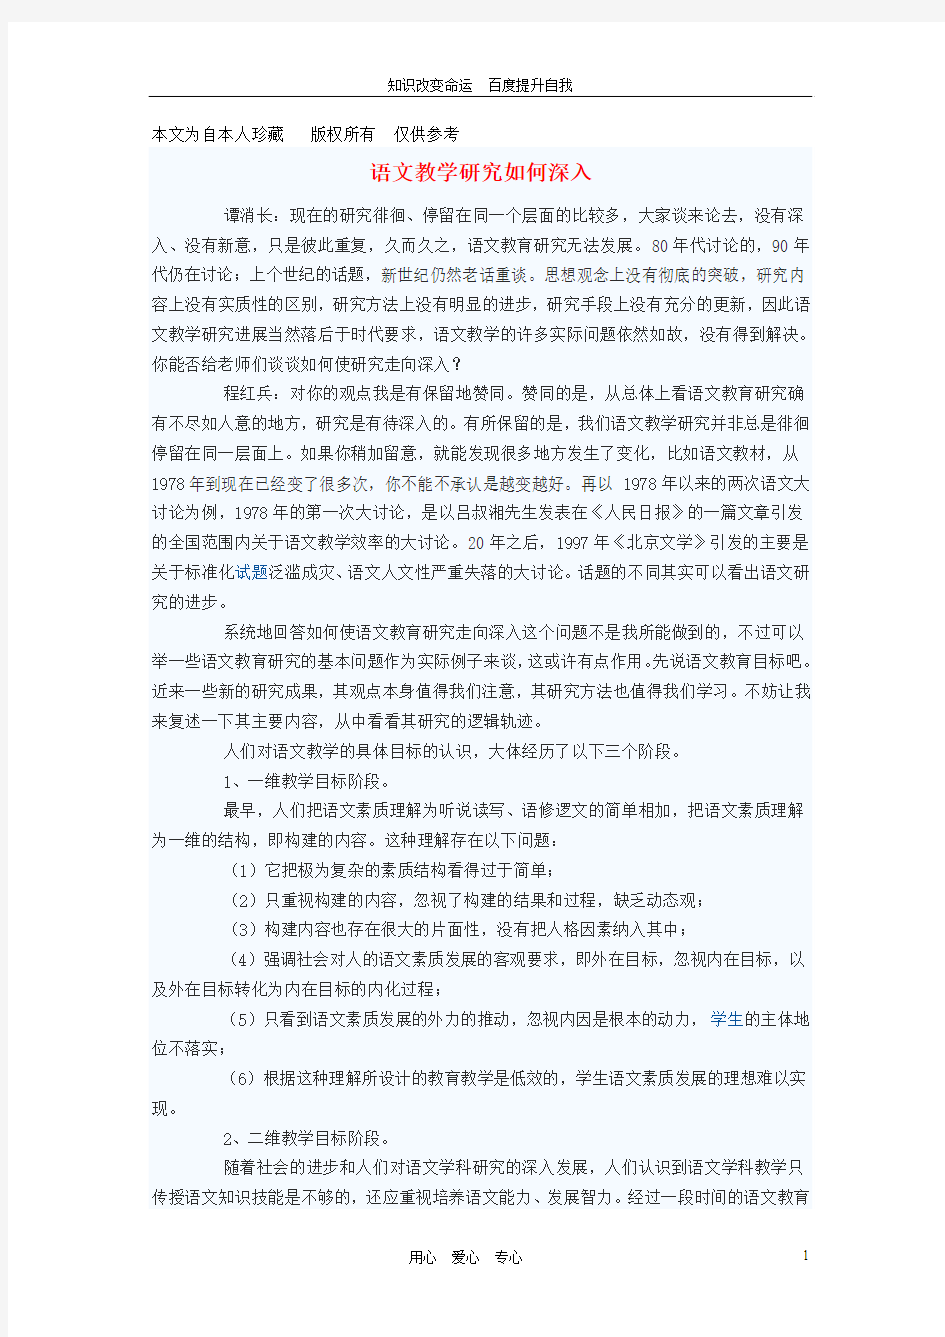 (no.1)初中语文教学论文 语文教学研究如何深入